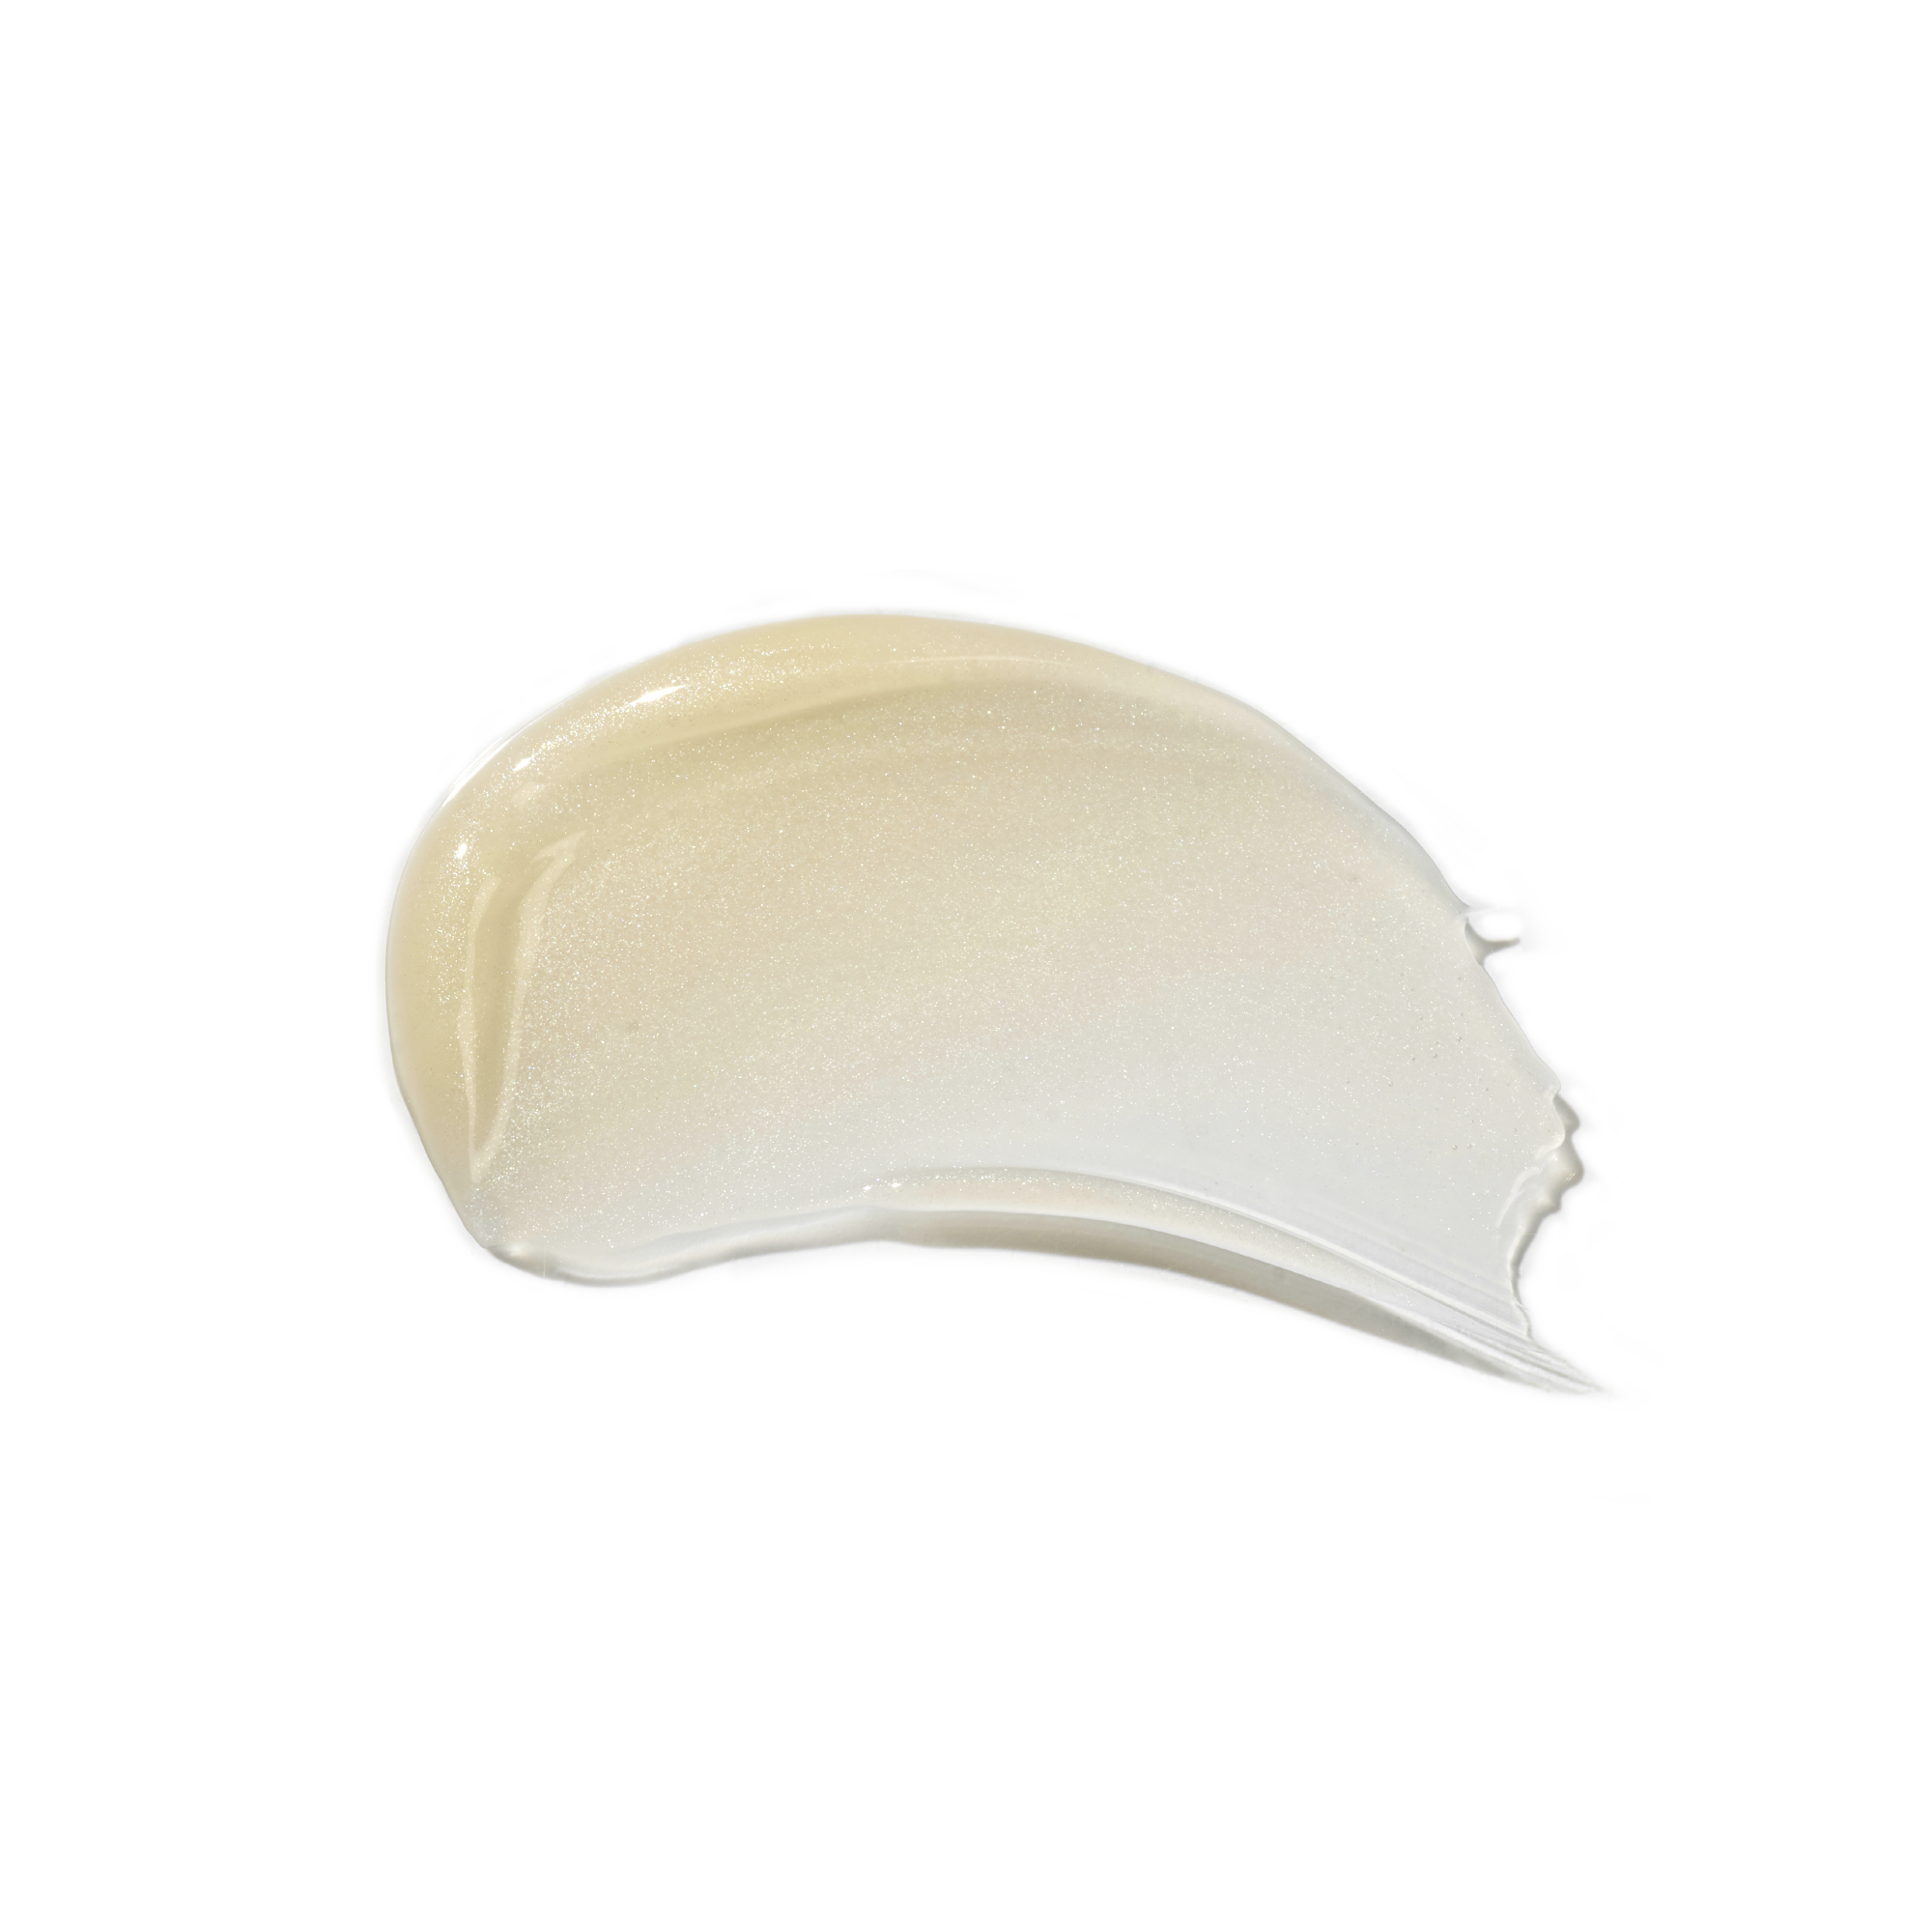 Dead Sea Crystal Osmoter™ X6 Smoothing Cream – AHAVA Global